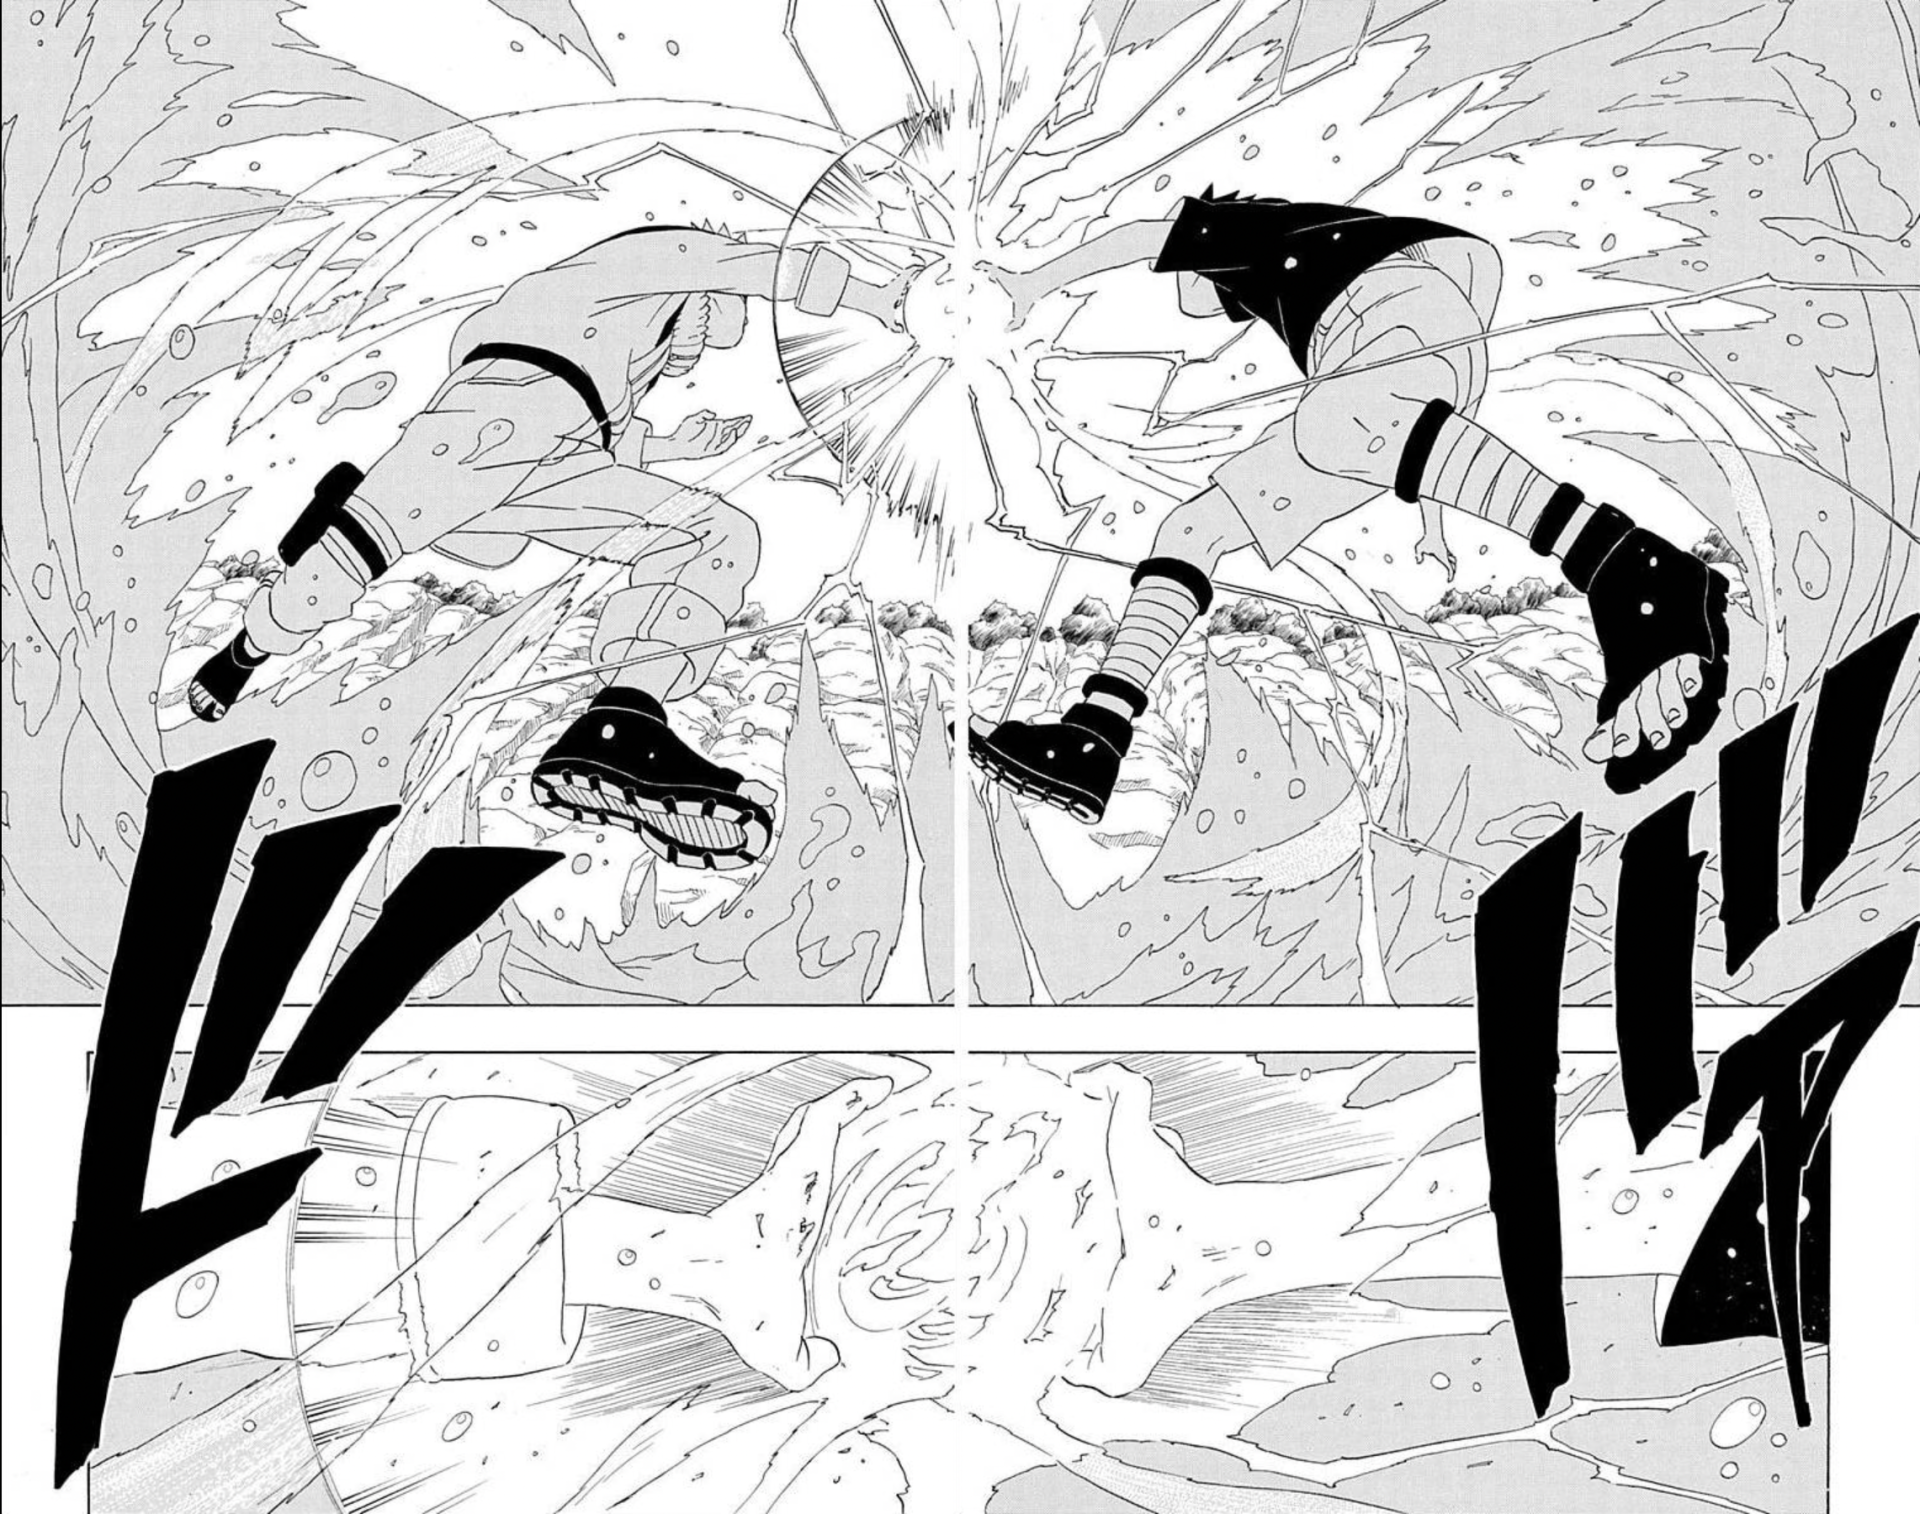 Naruto & Sasuke's Original Final Duel Would Have Been the Series